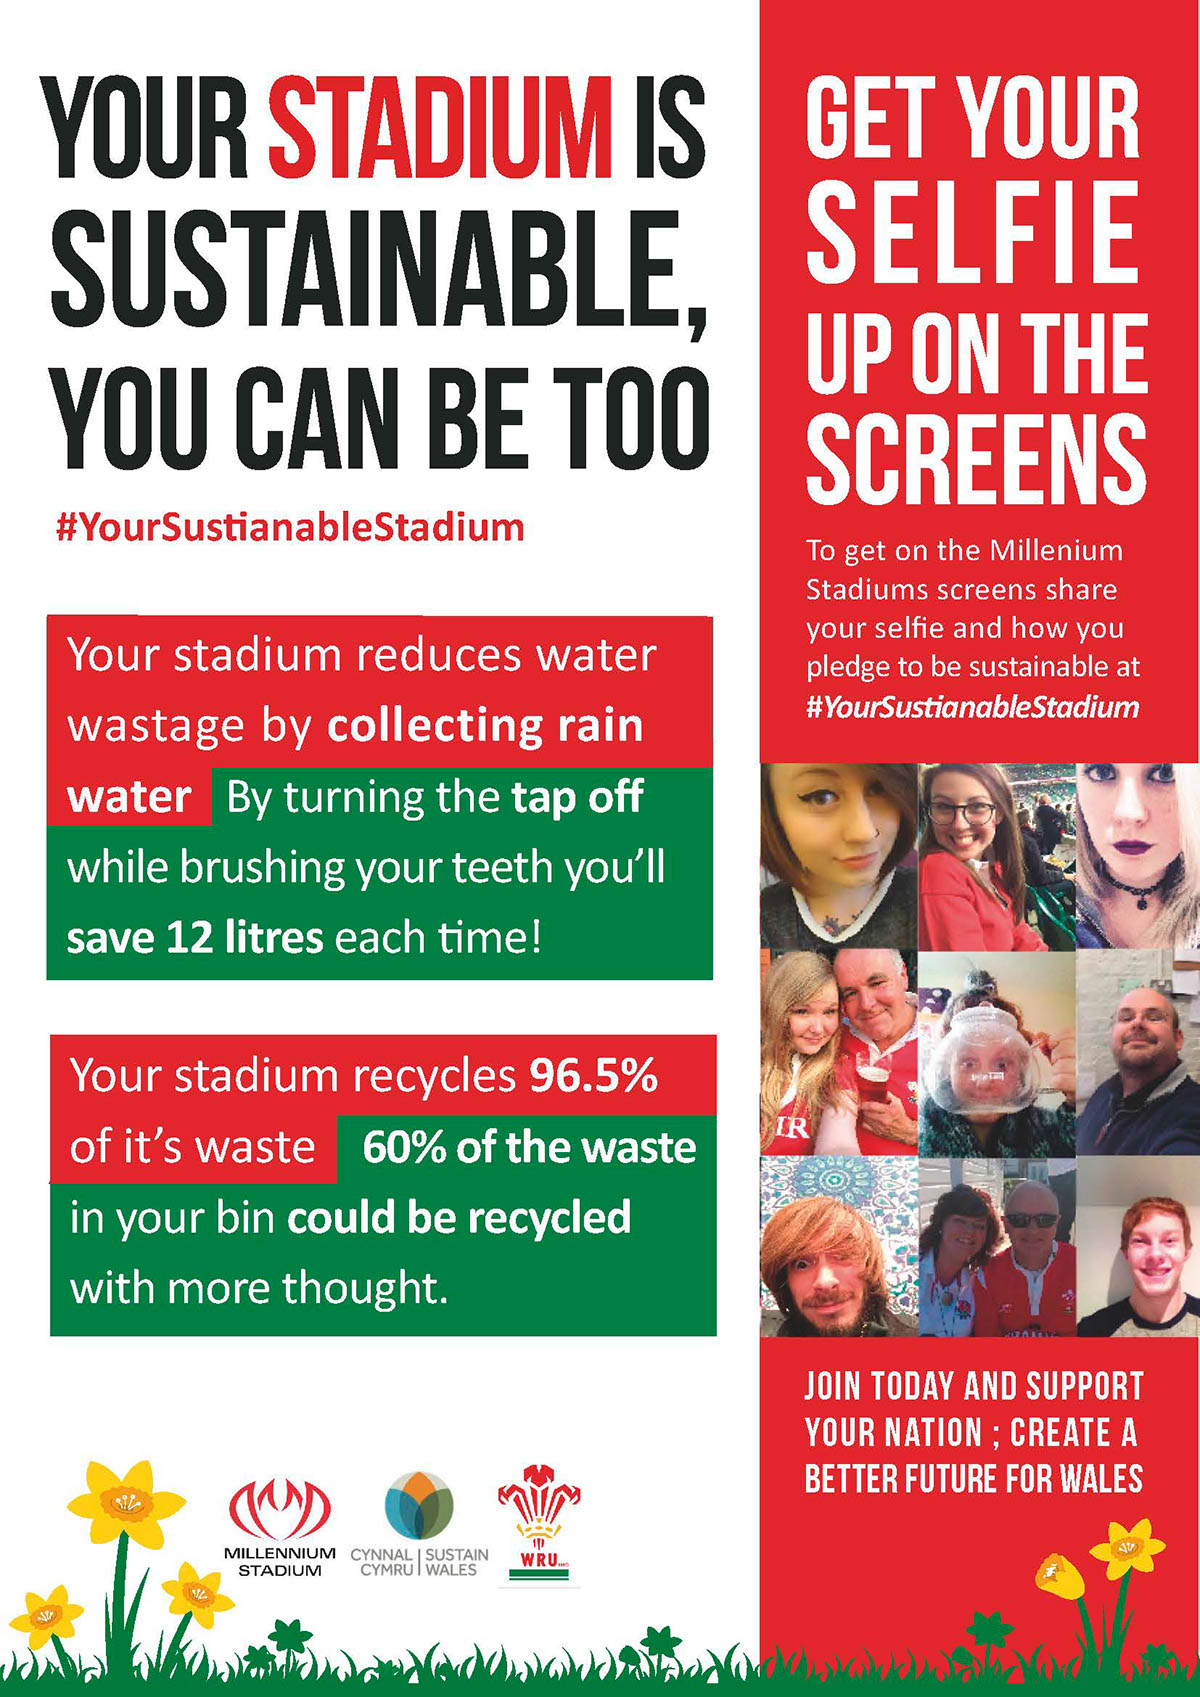 brand promote Sustainable campaign hashtag selfie enviroment WRU cynnal cymru